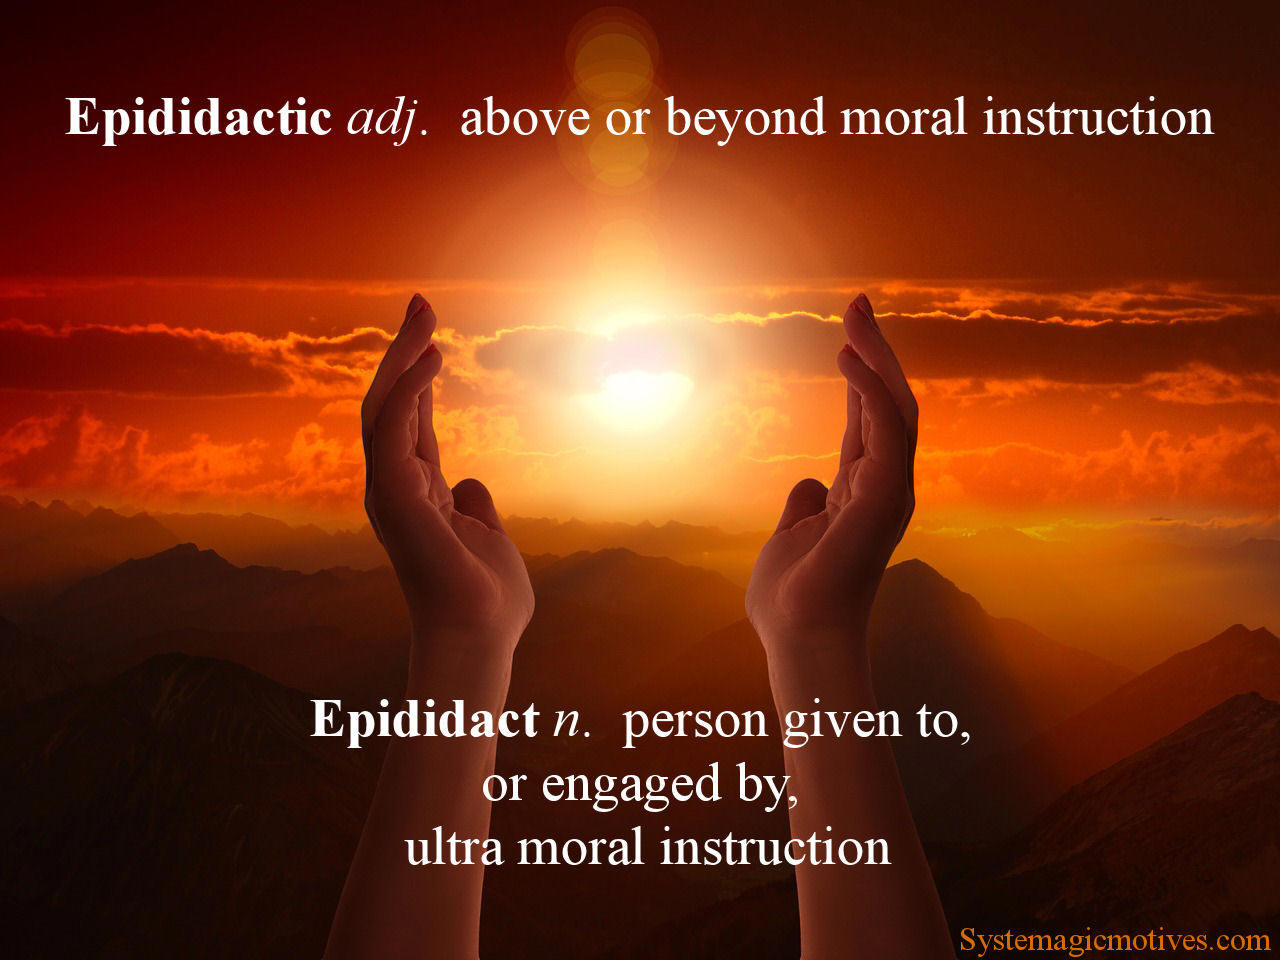 Graphic Definition of Epididact/Epididactic